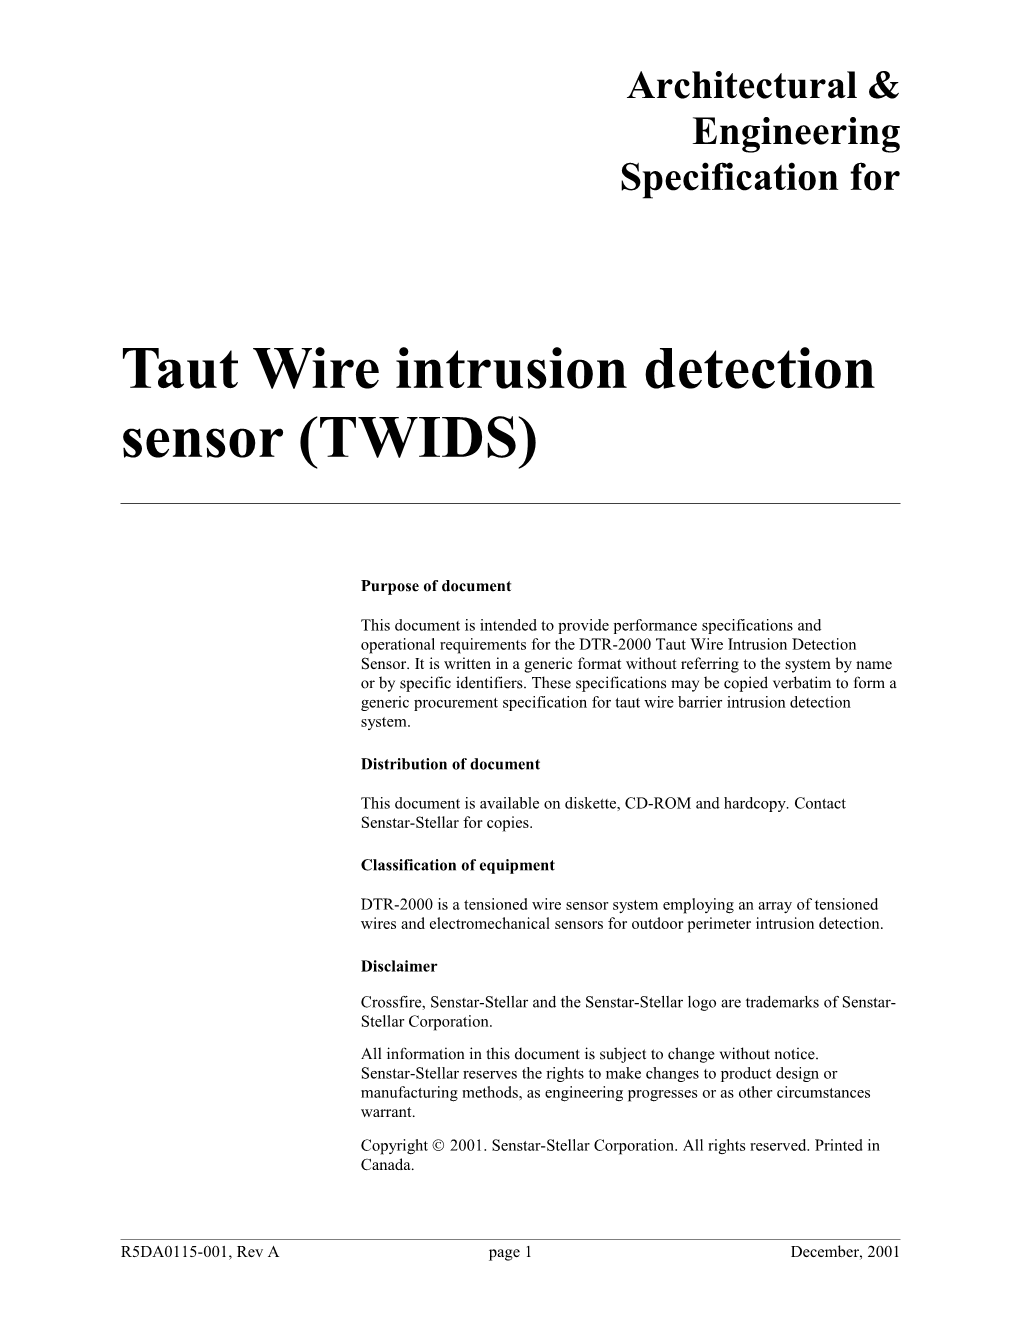 Taut Wire Intrusion Detection Sensor (TWIDS)